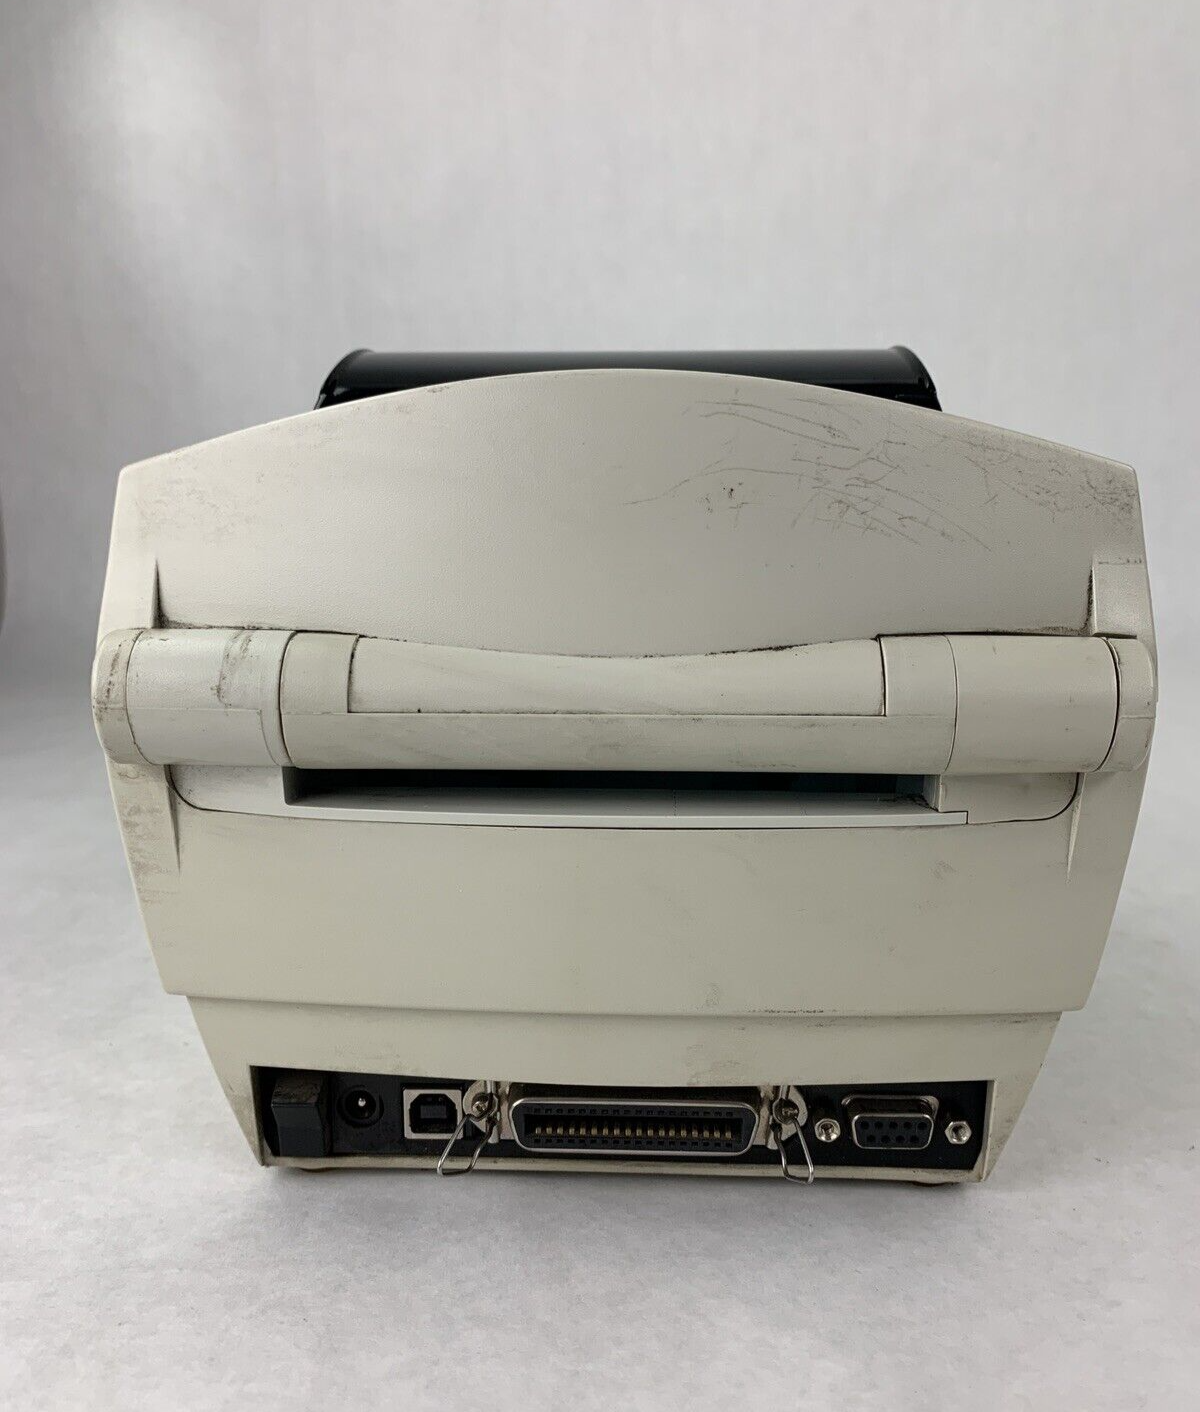 Eltron 2844 CTP Direct Thermal Label Shipping Printer Zebra UPS LP2844 Tested